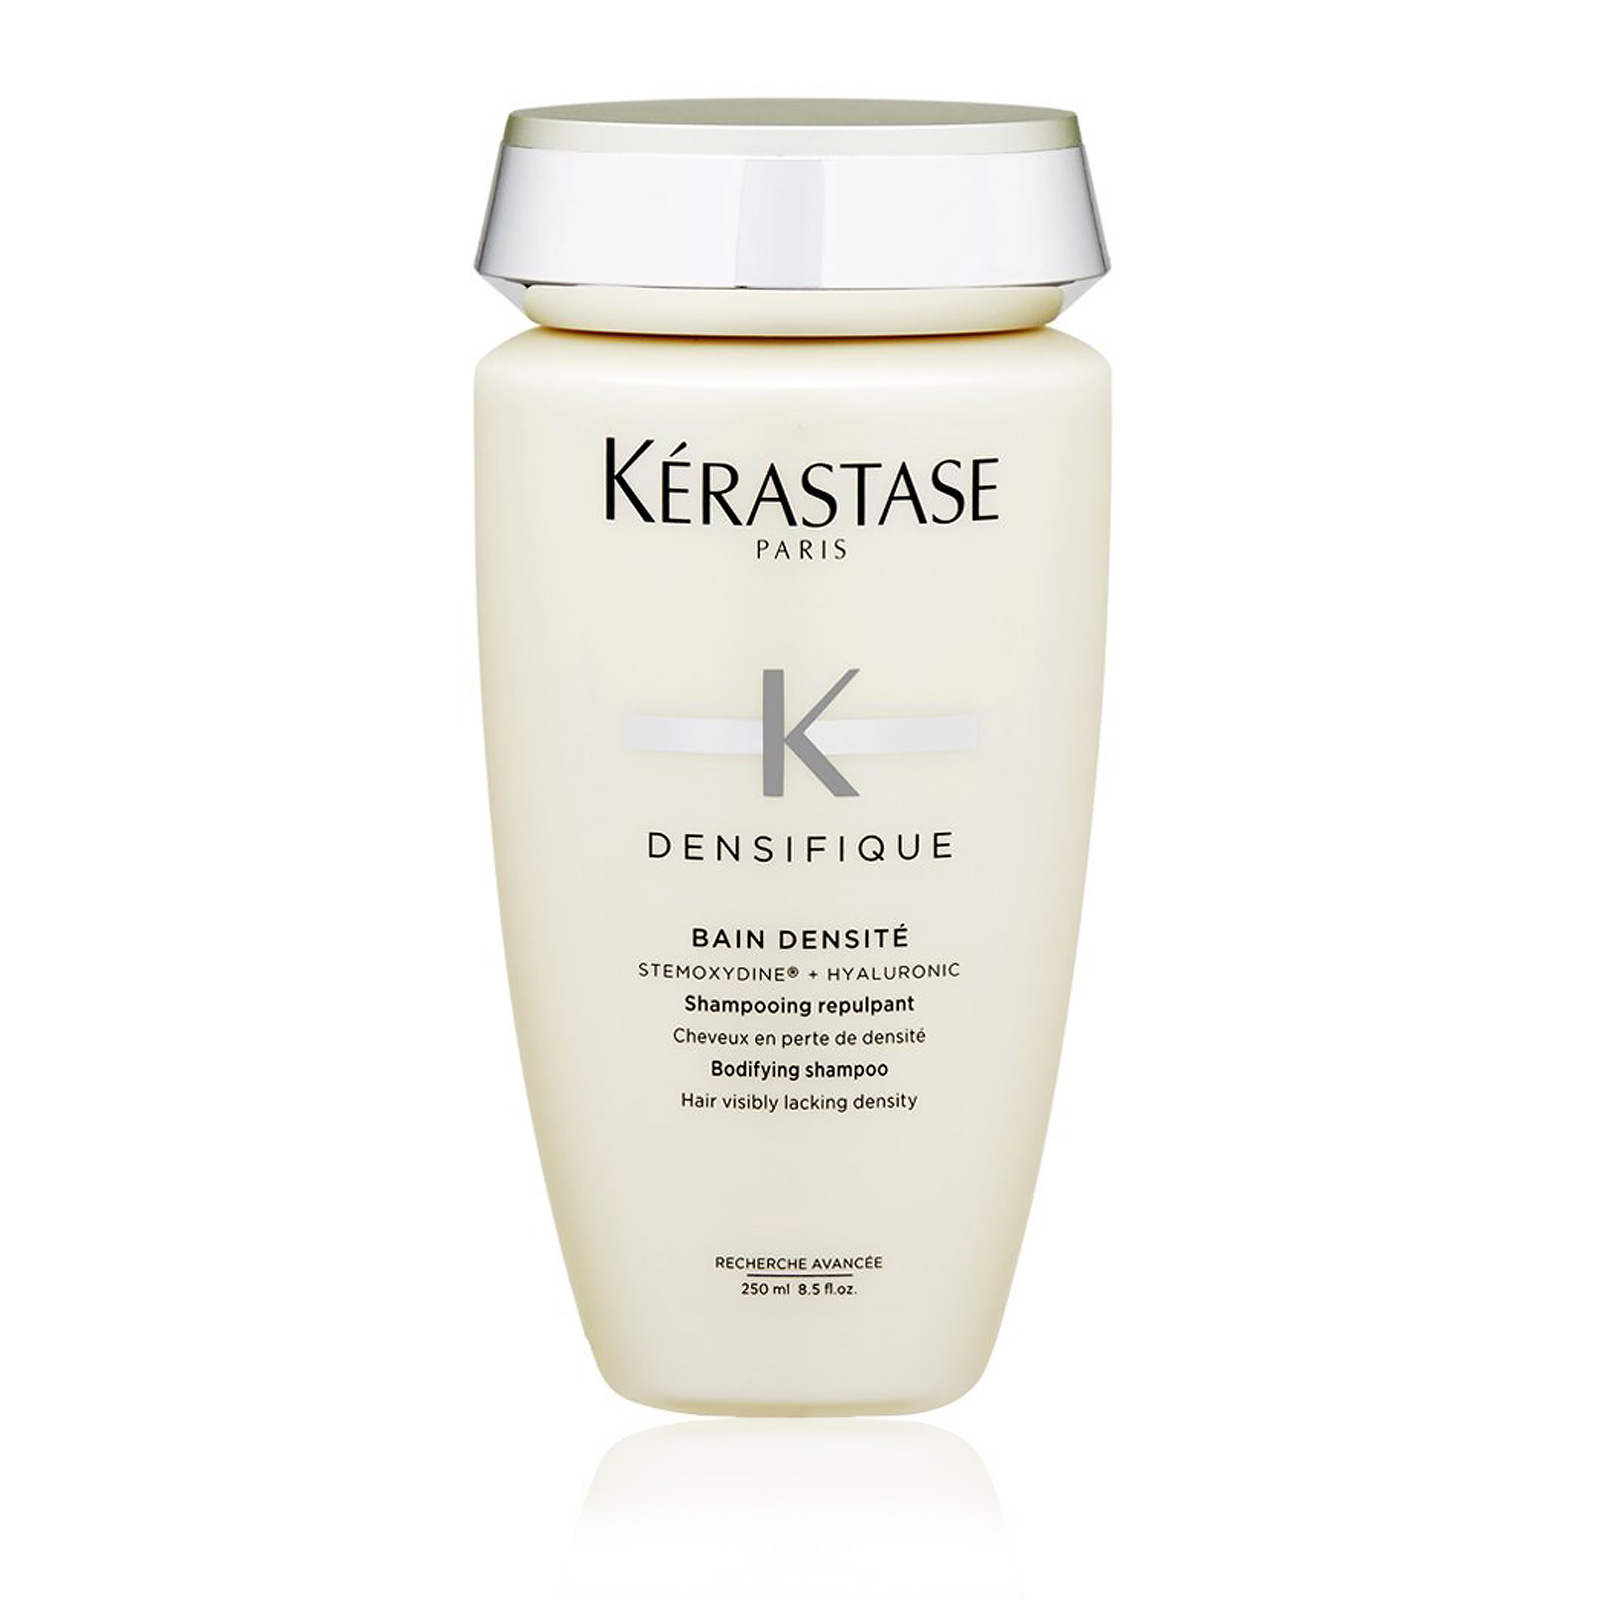 Kérastase Paris Densifique Bain Densite Shampoo (For Hair Visibly Lacking Density)250 ml 8.5 oz Beauty